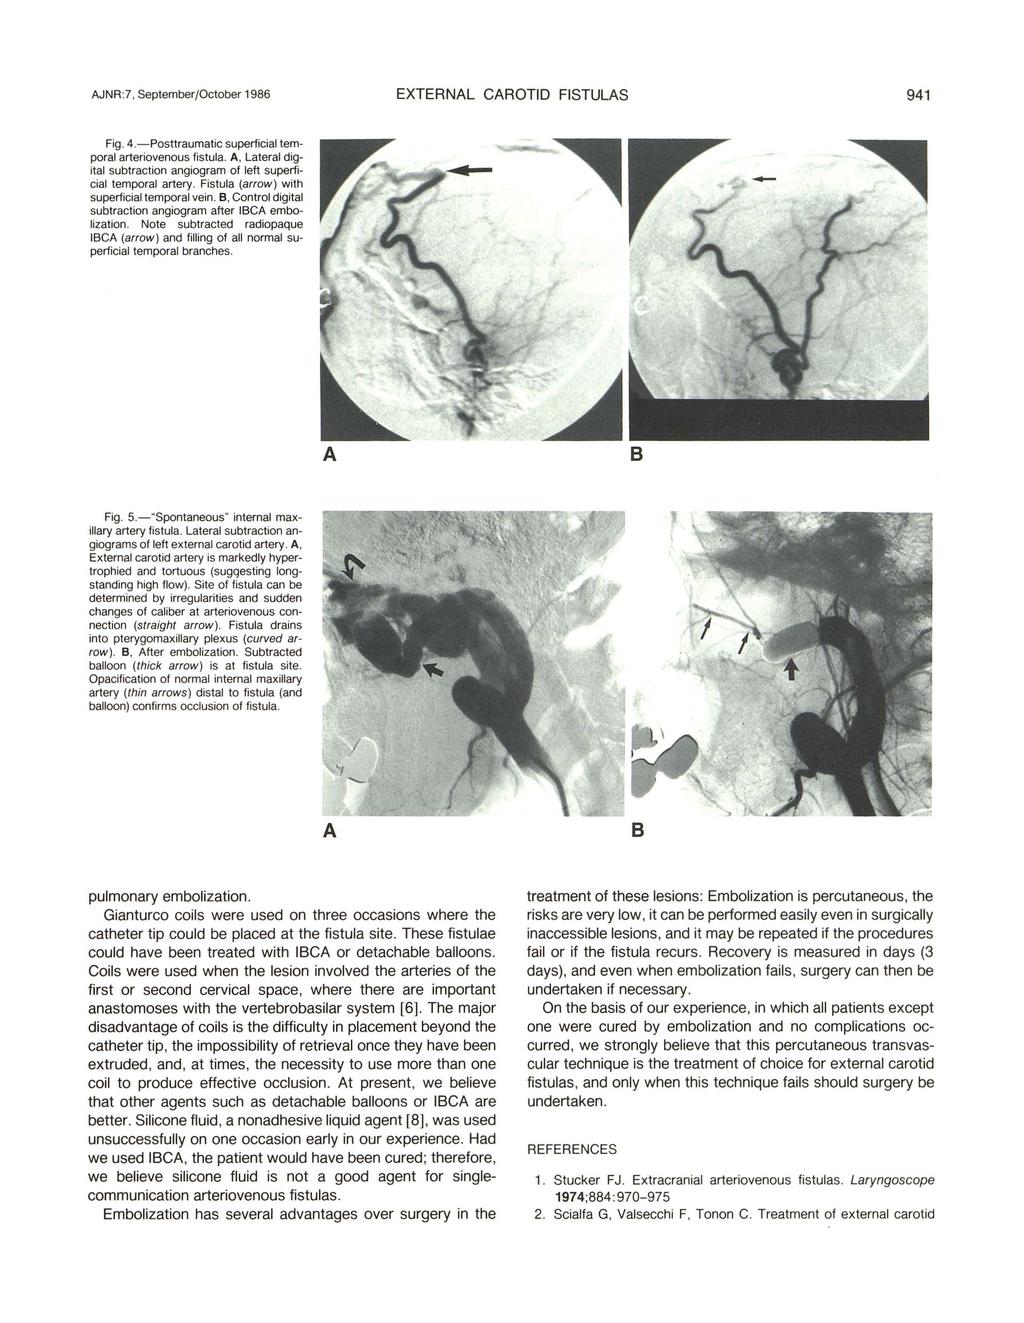 JNR :7, September/October 1986 EXTERNL CROTID FISTULS 941 Fig. 4.-Posttraumatic superficial temporal arteriovenous fistula., Lateral digital subtraction angiogram of left superficial temporal artery.